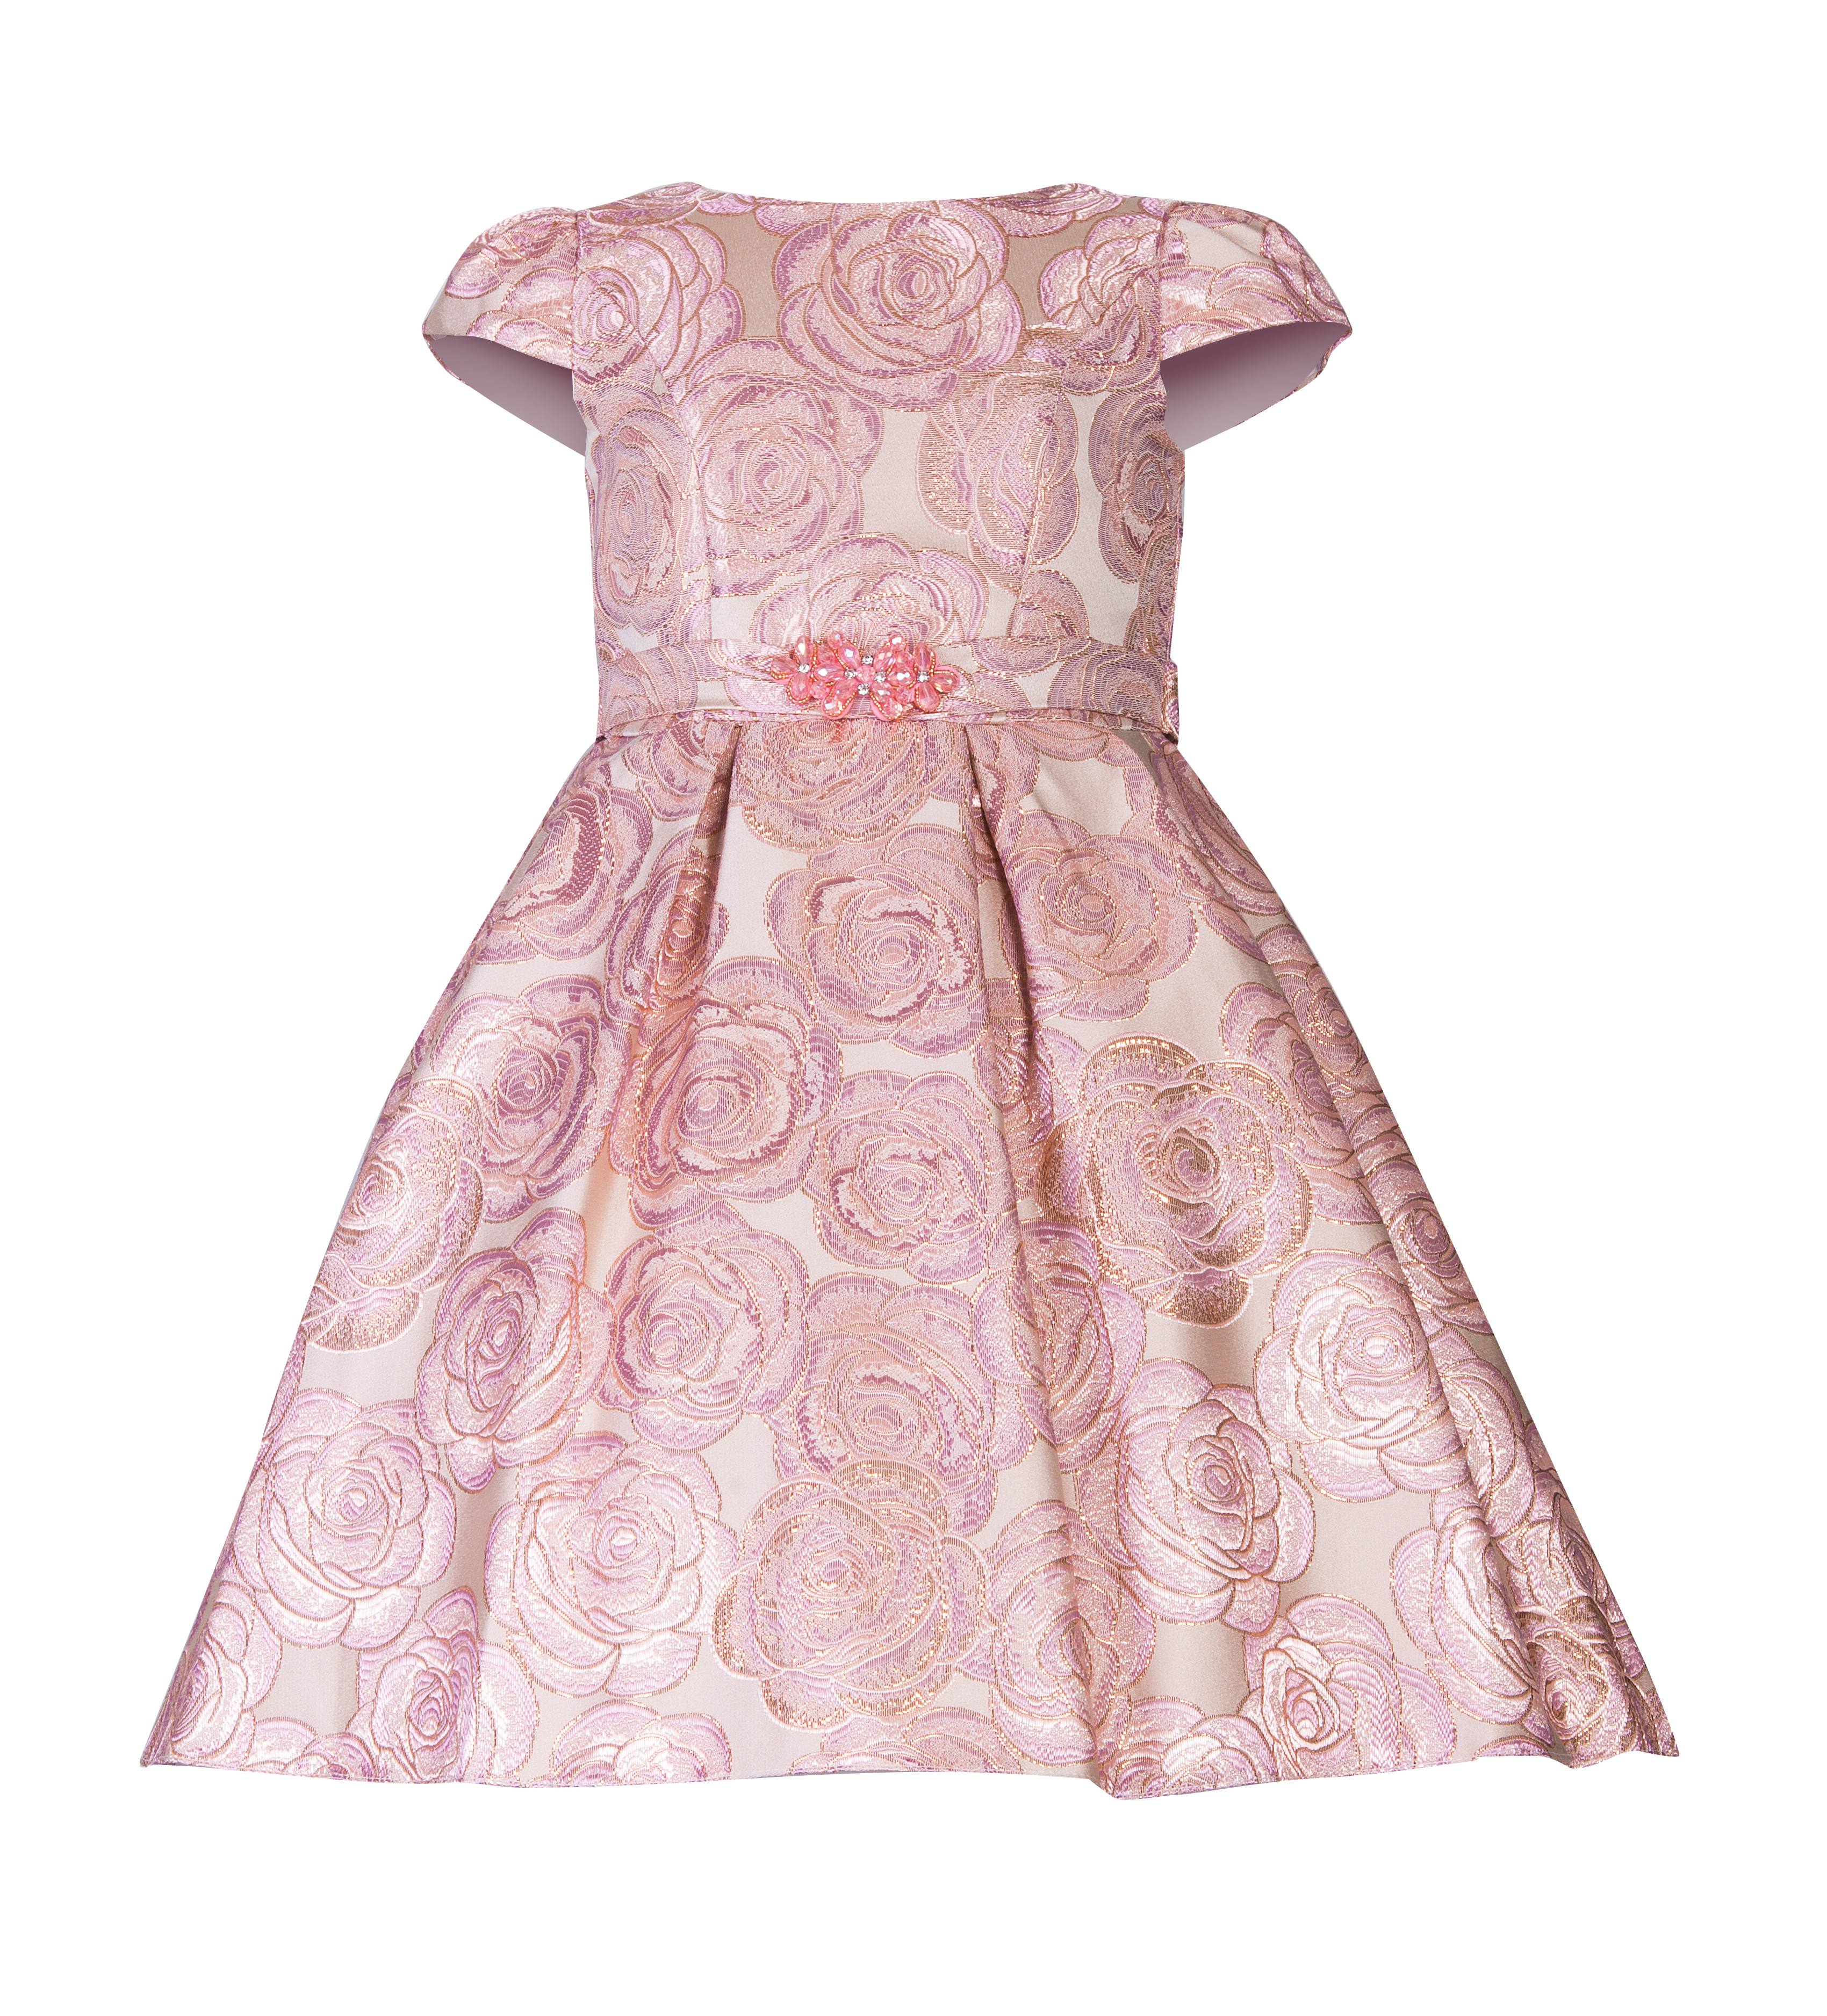 Romano Princess Rose Pink Brocade Dress ...